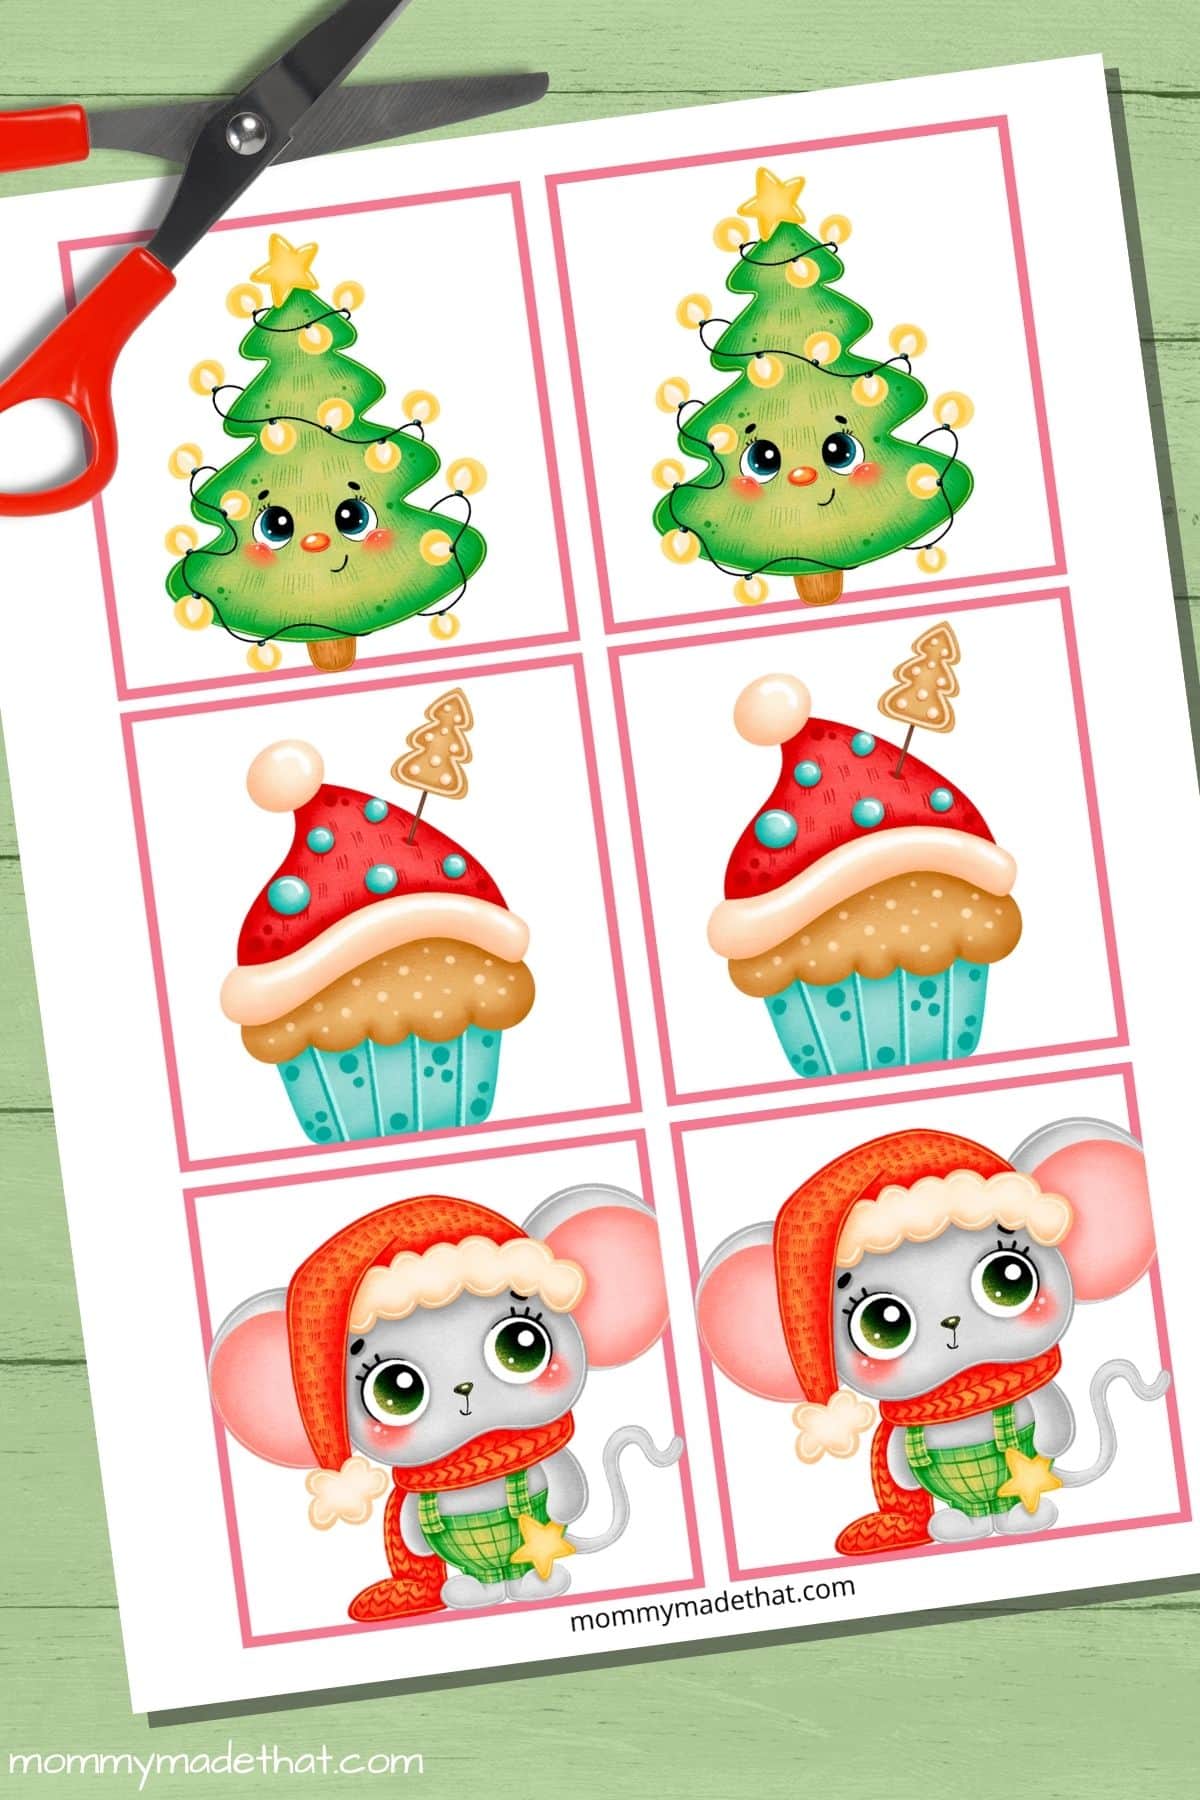 Christmas memory game, match the Christmas characters